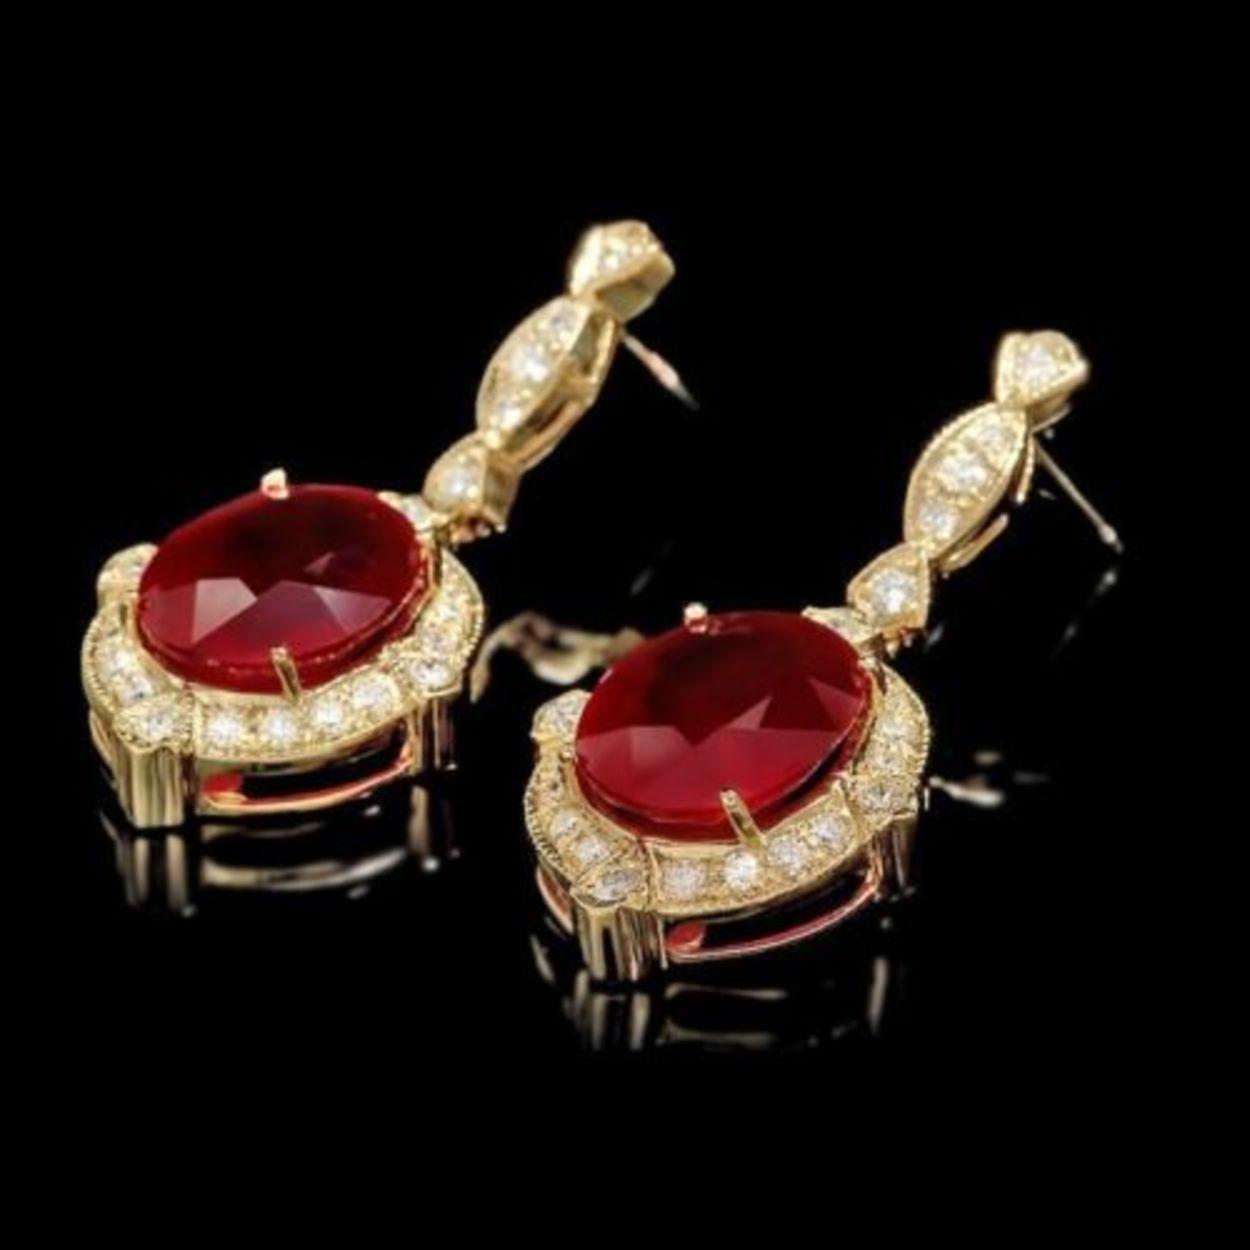 14k Gold 22.73ct Ruby 1.69ct Diamond Earrings